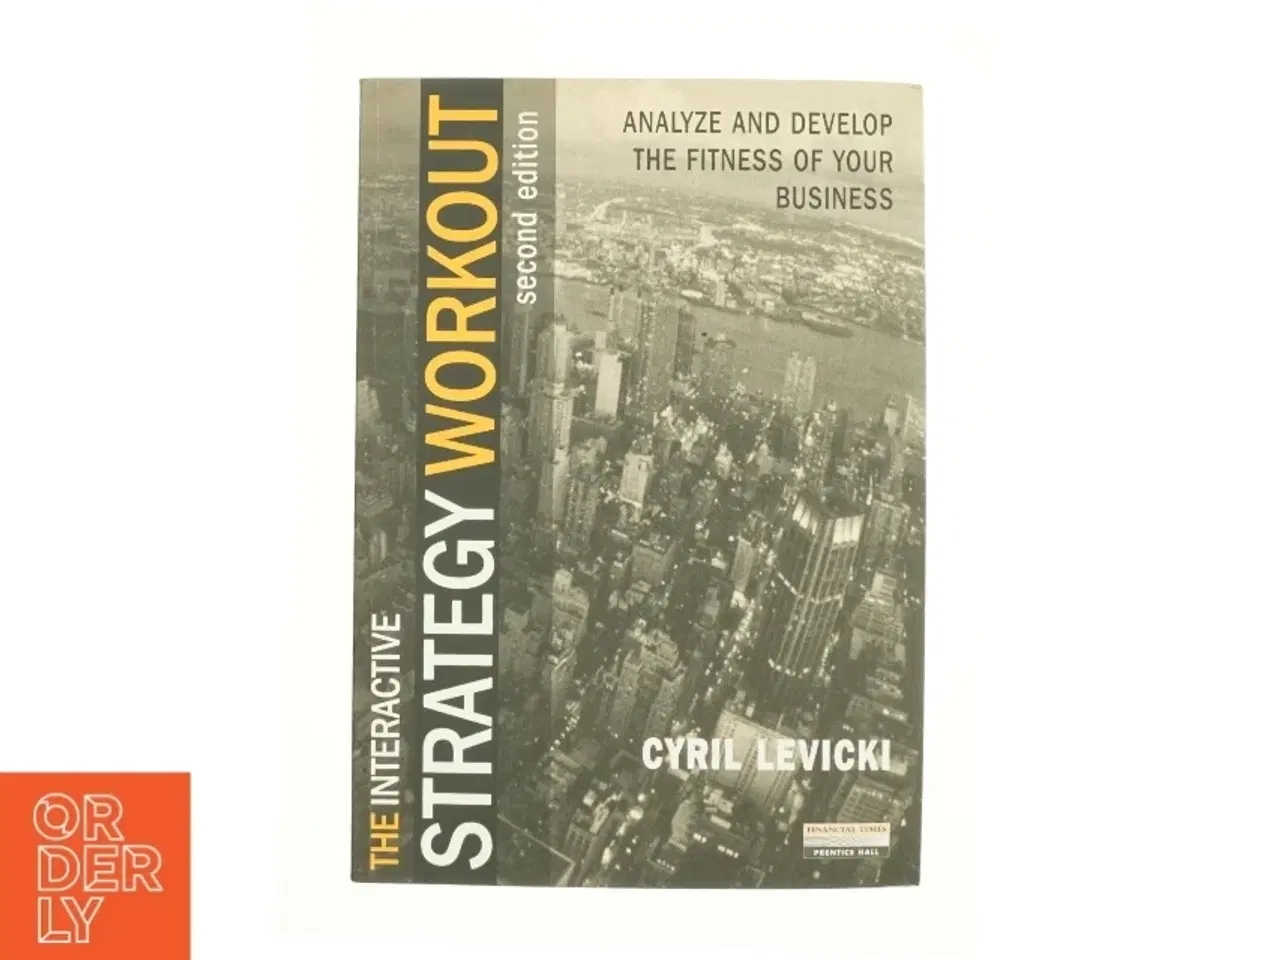 Billede 1 - The Strategy Workout: a Journey to the Heart of Your Business af Levicki, Cyril / Levicki (Bog)